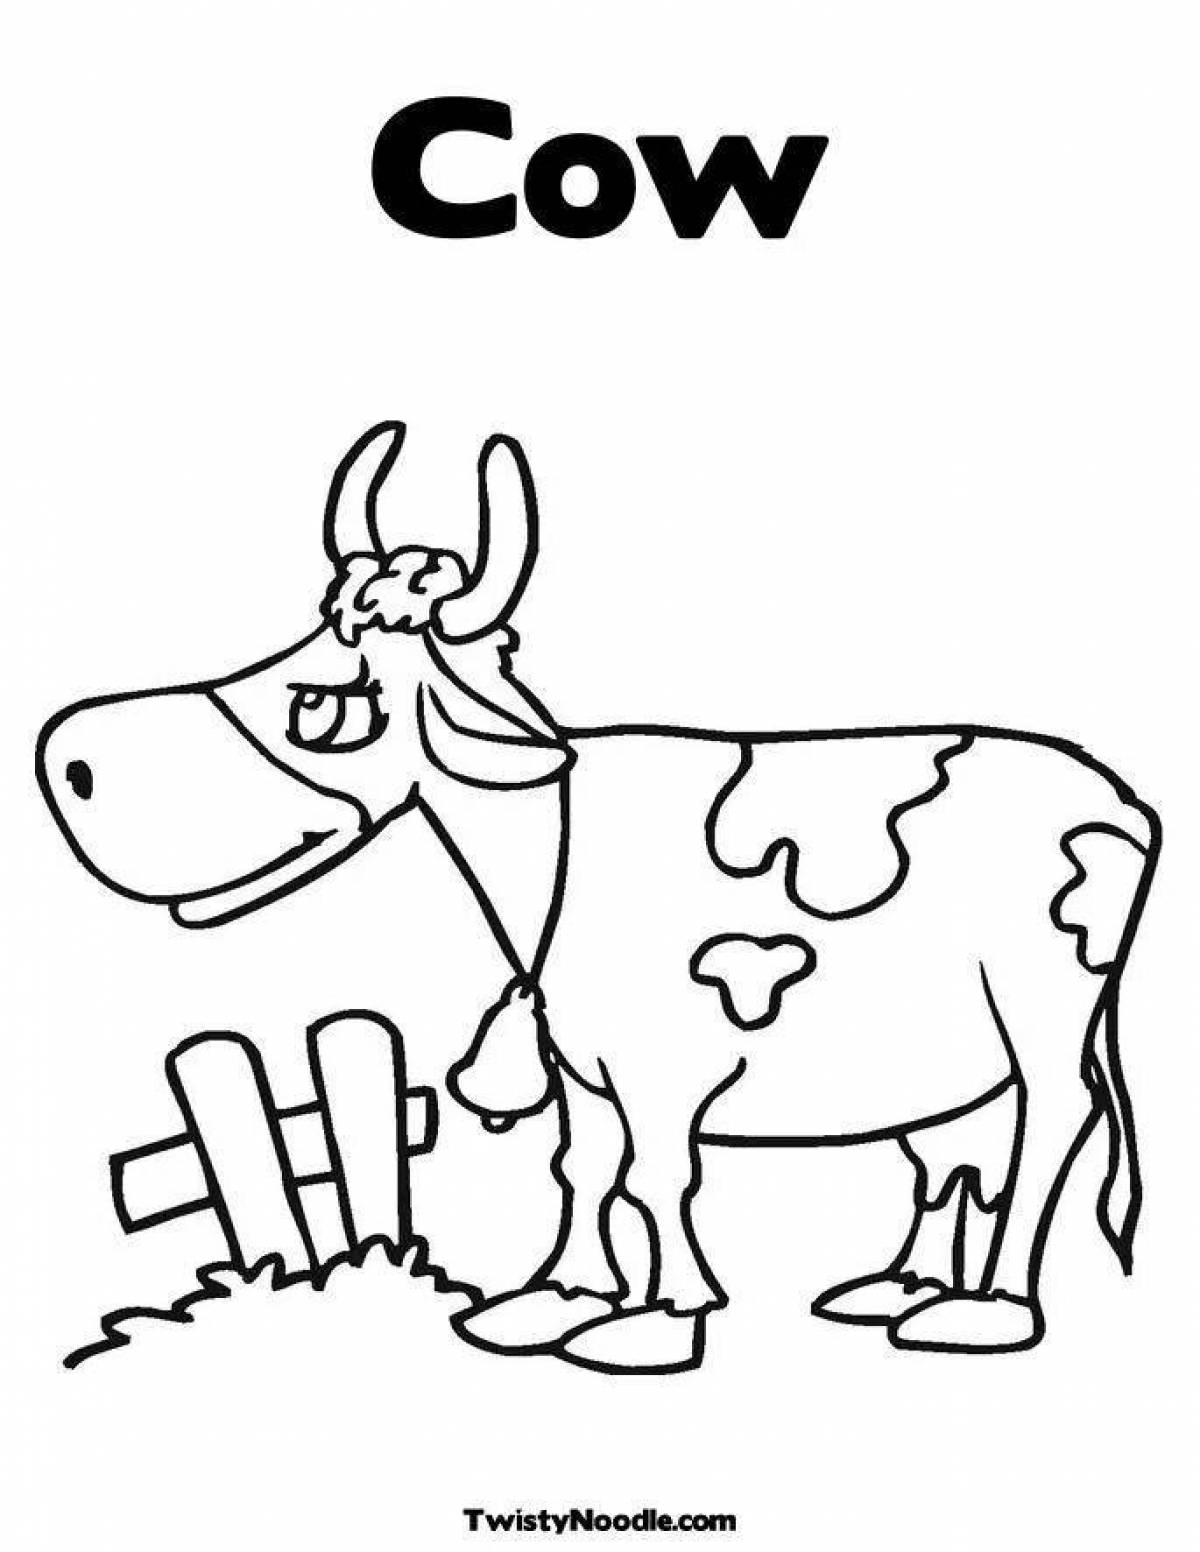 Cow #9